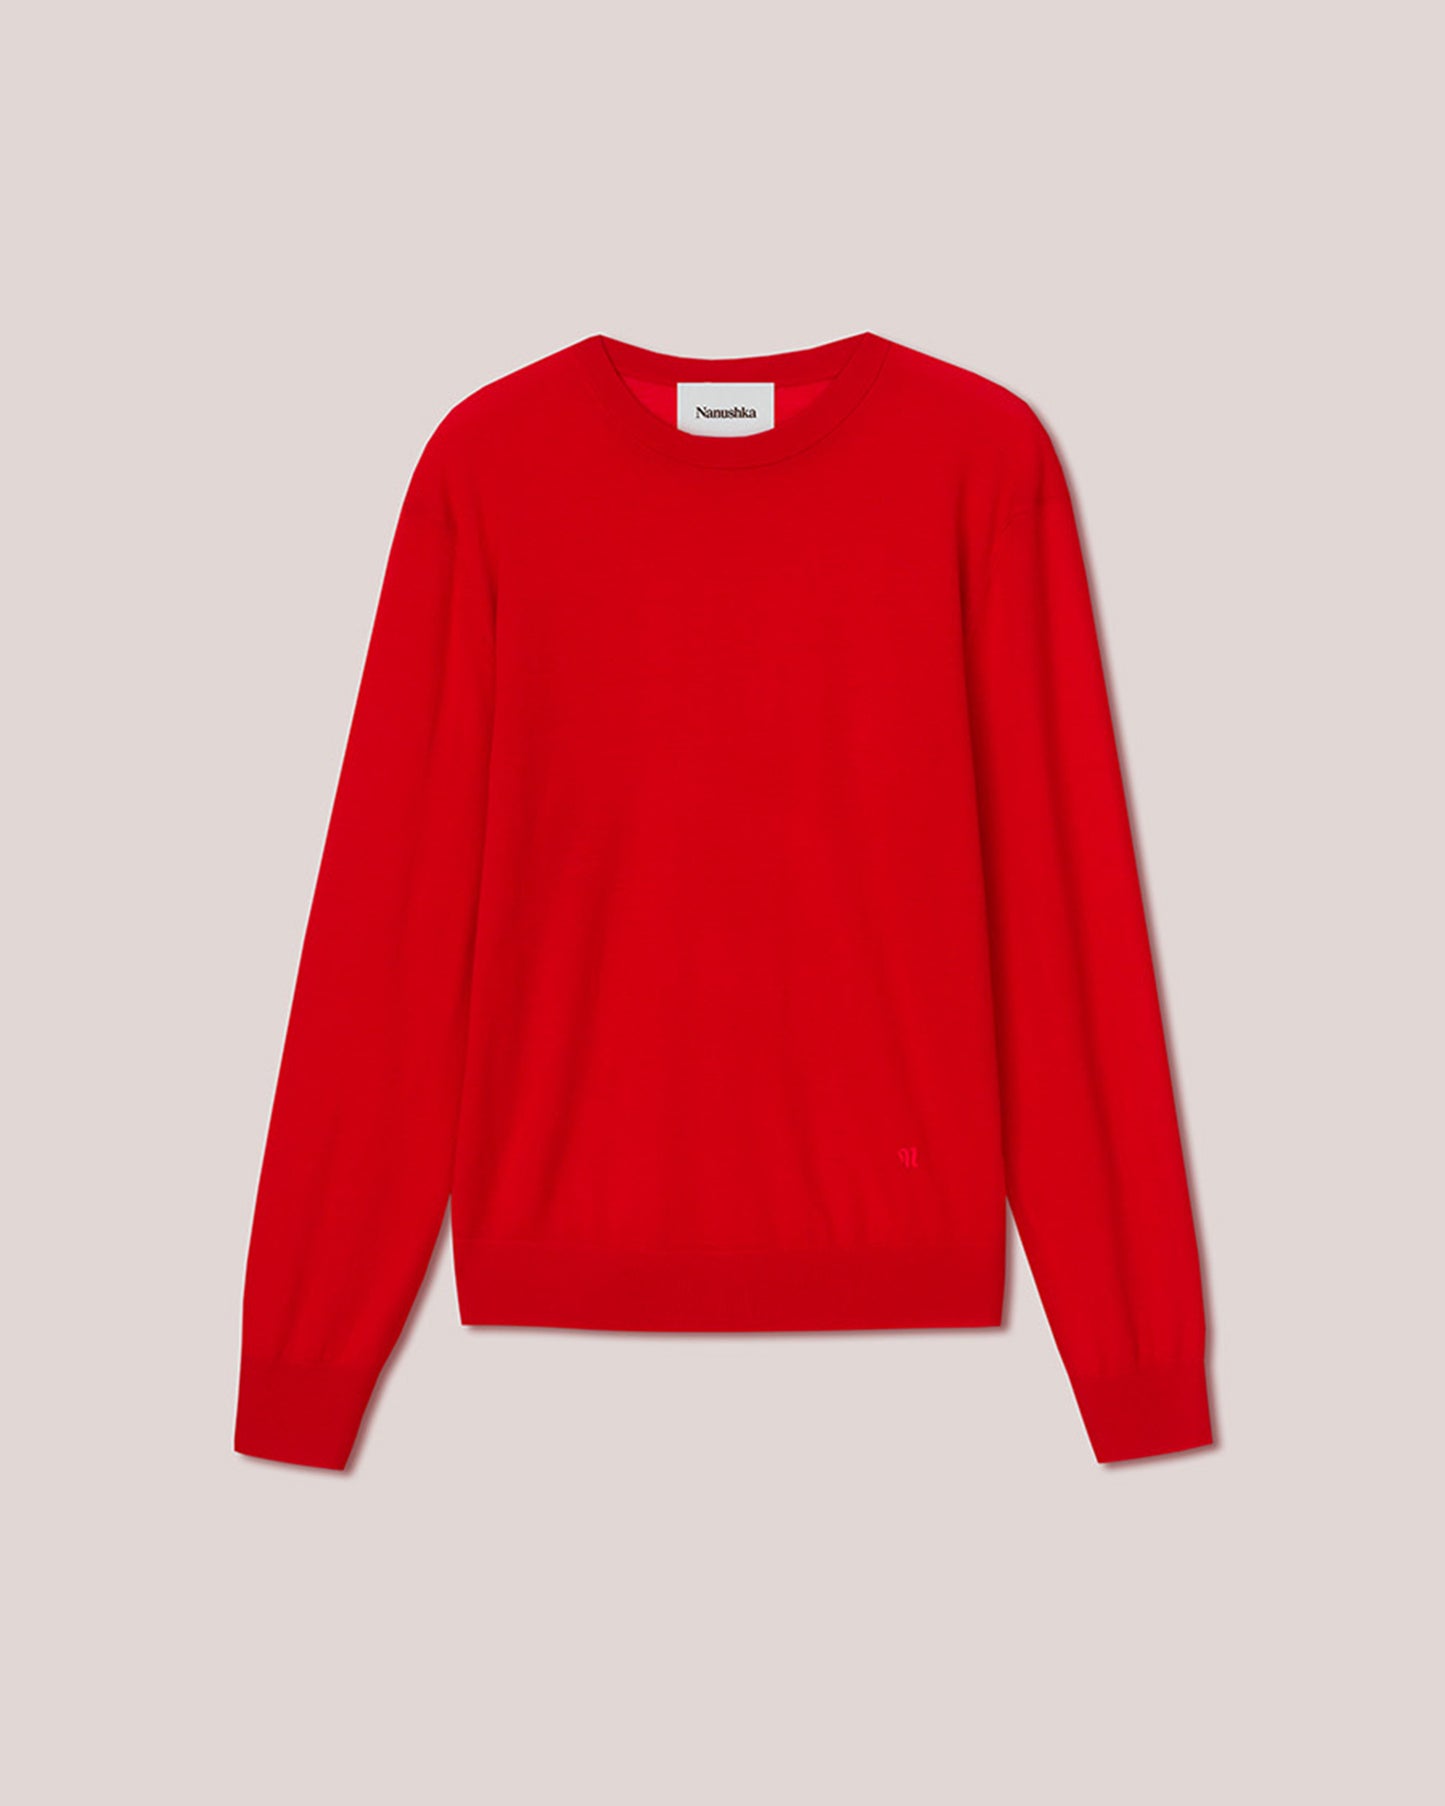 Madan - Superfine Merino Sweater - Red Cny 21